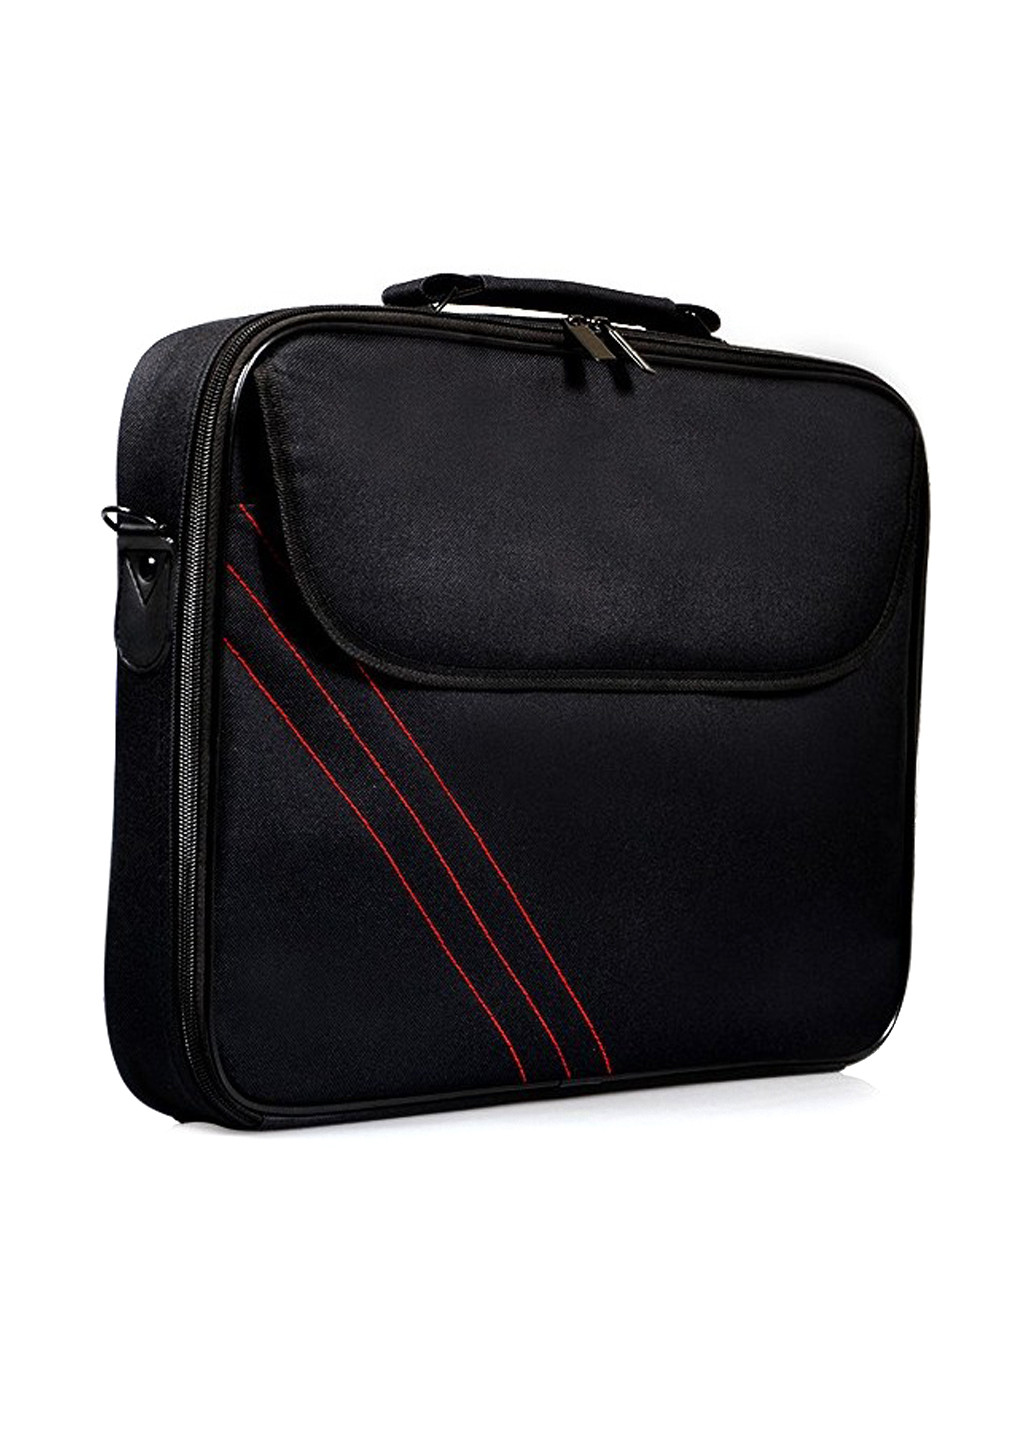 Сумка для ноутбука BAG S13 13.3-14 Black Port Designs bag s13 13.3-14" black (137229810)